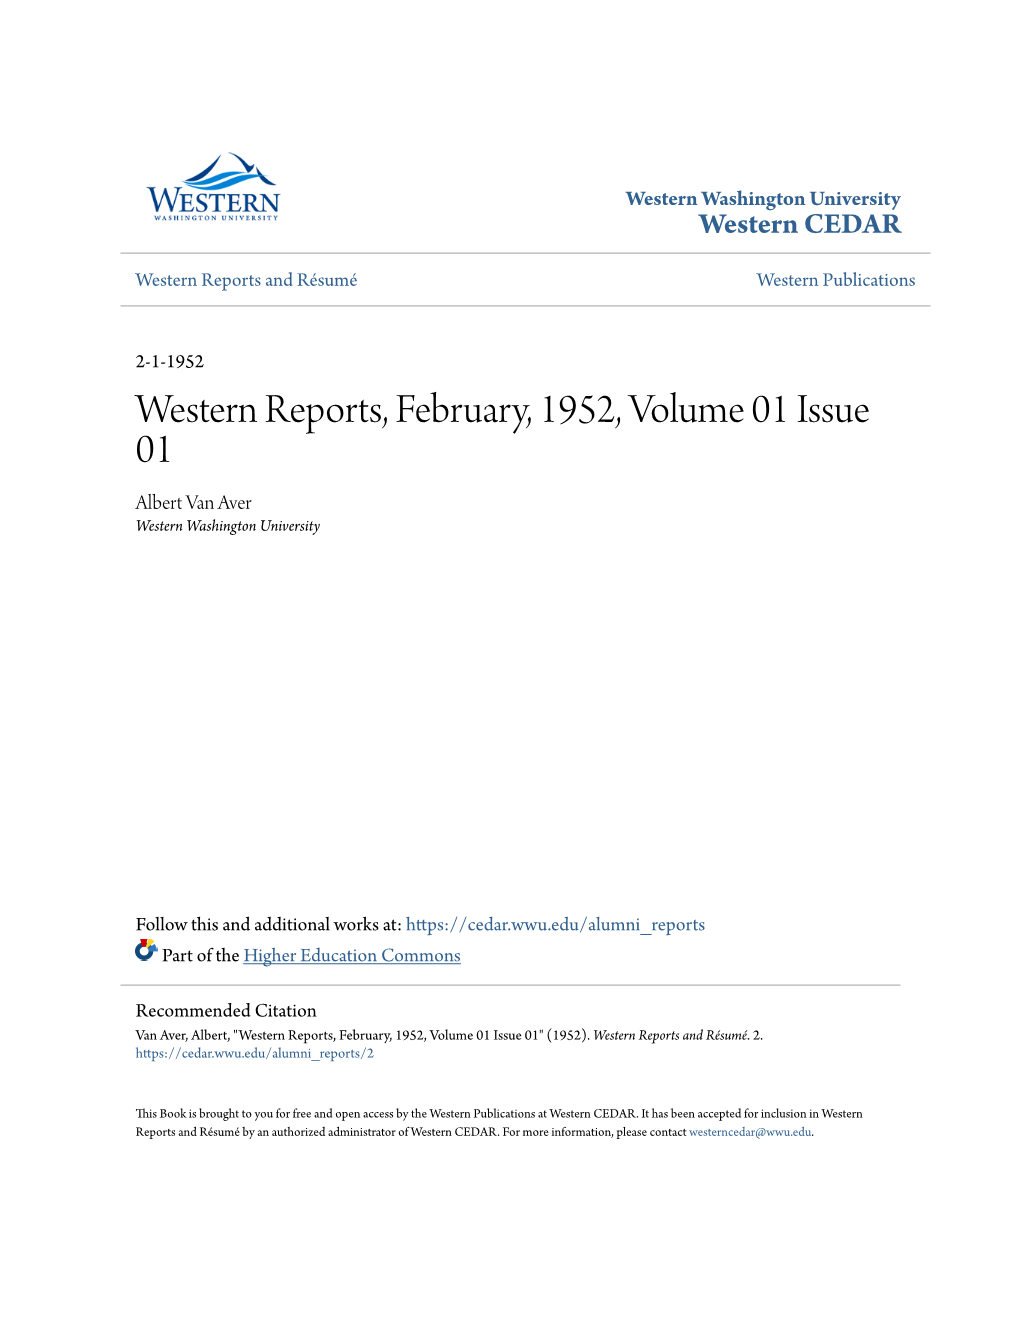 Western Reports, February, 1952, Volume 01 Issue 01 Albert Van Aver Western Washington University